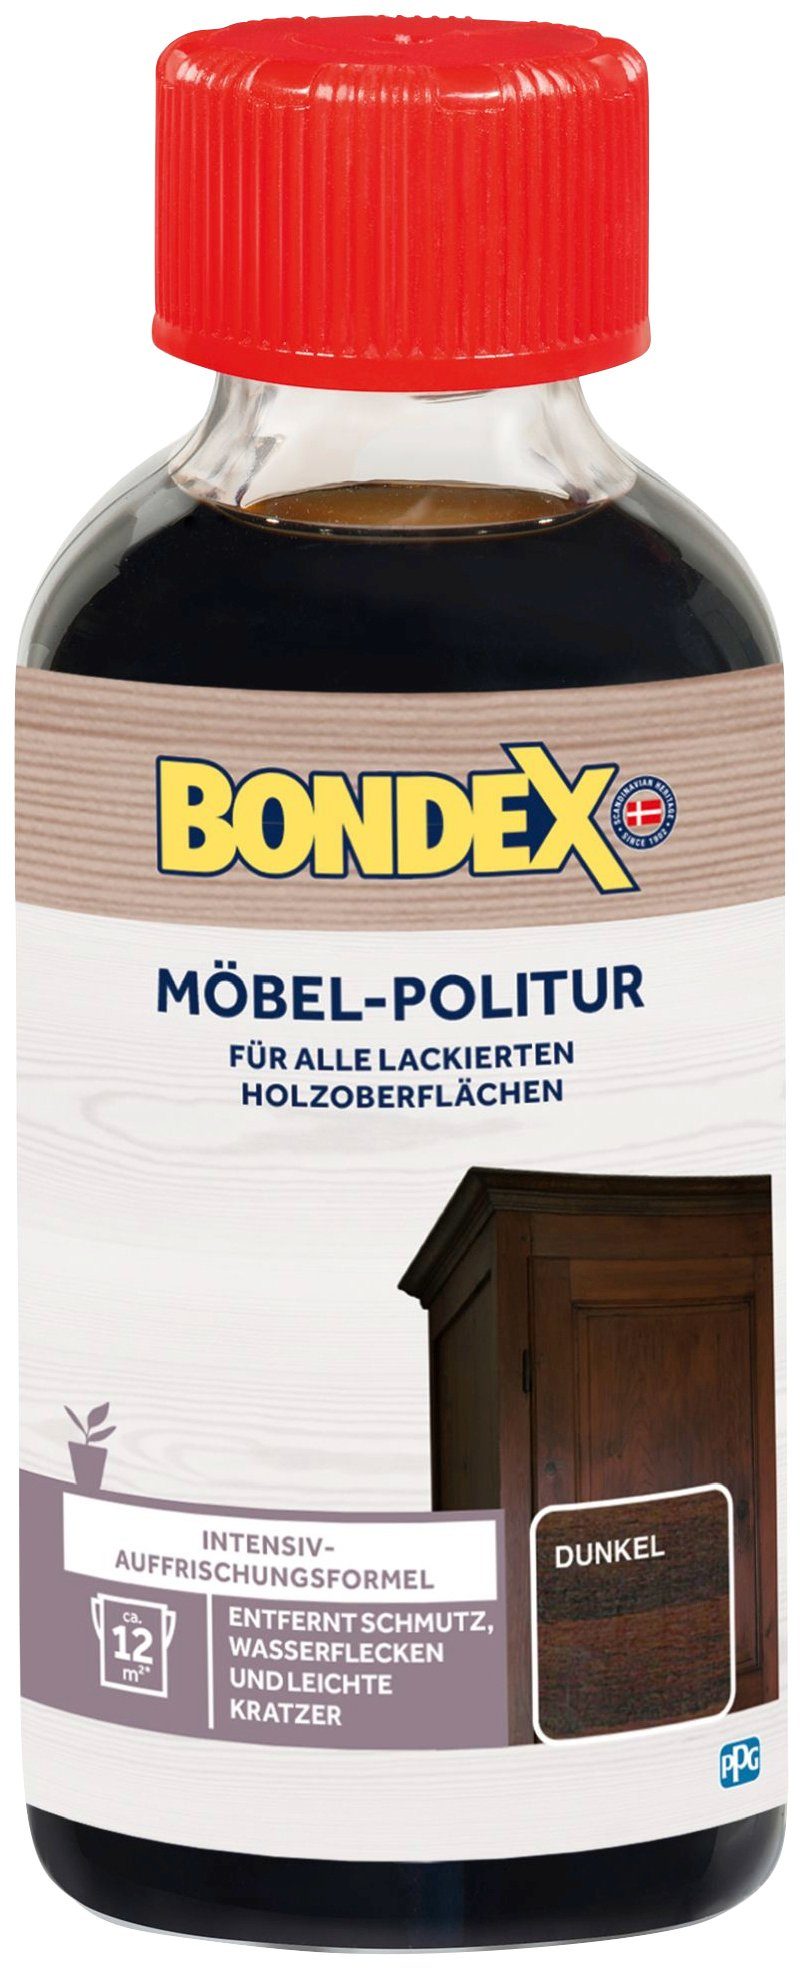 Bondex MÖBEL-POLITUR Dunkel Holzpflegeöl, 0,15 l | Bodenpflege